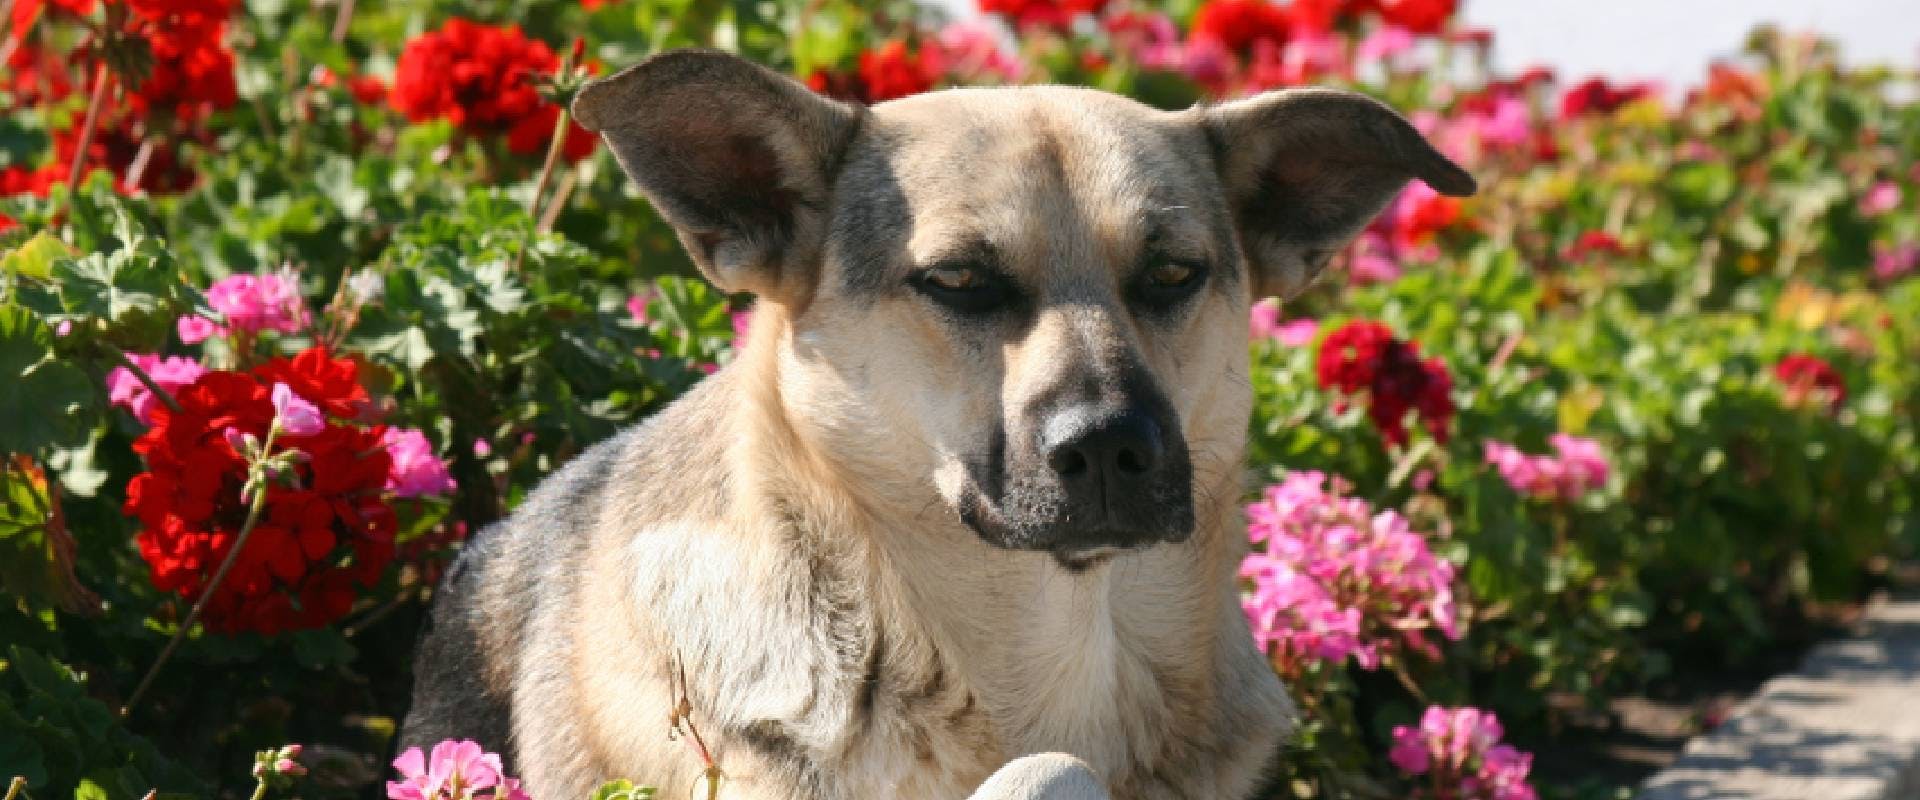 Dog sat in a flower bed